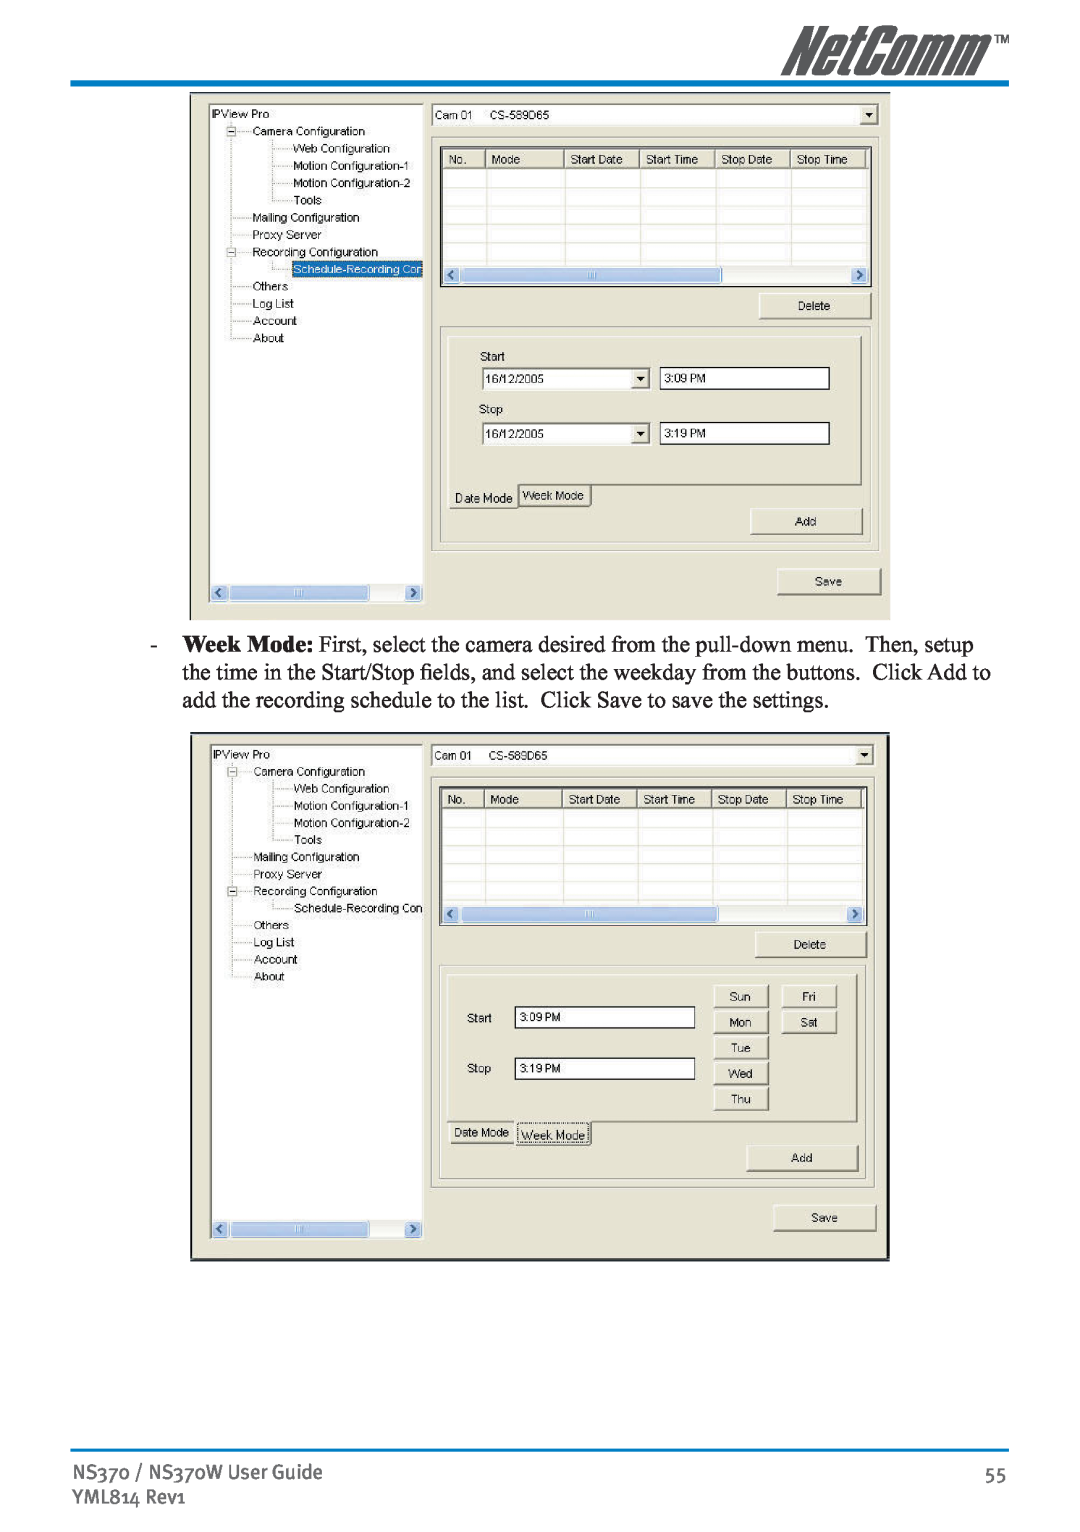 NetComm manual NS370 / NS370W User Guide, YML814 Rev1 